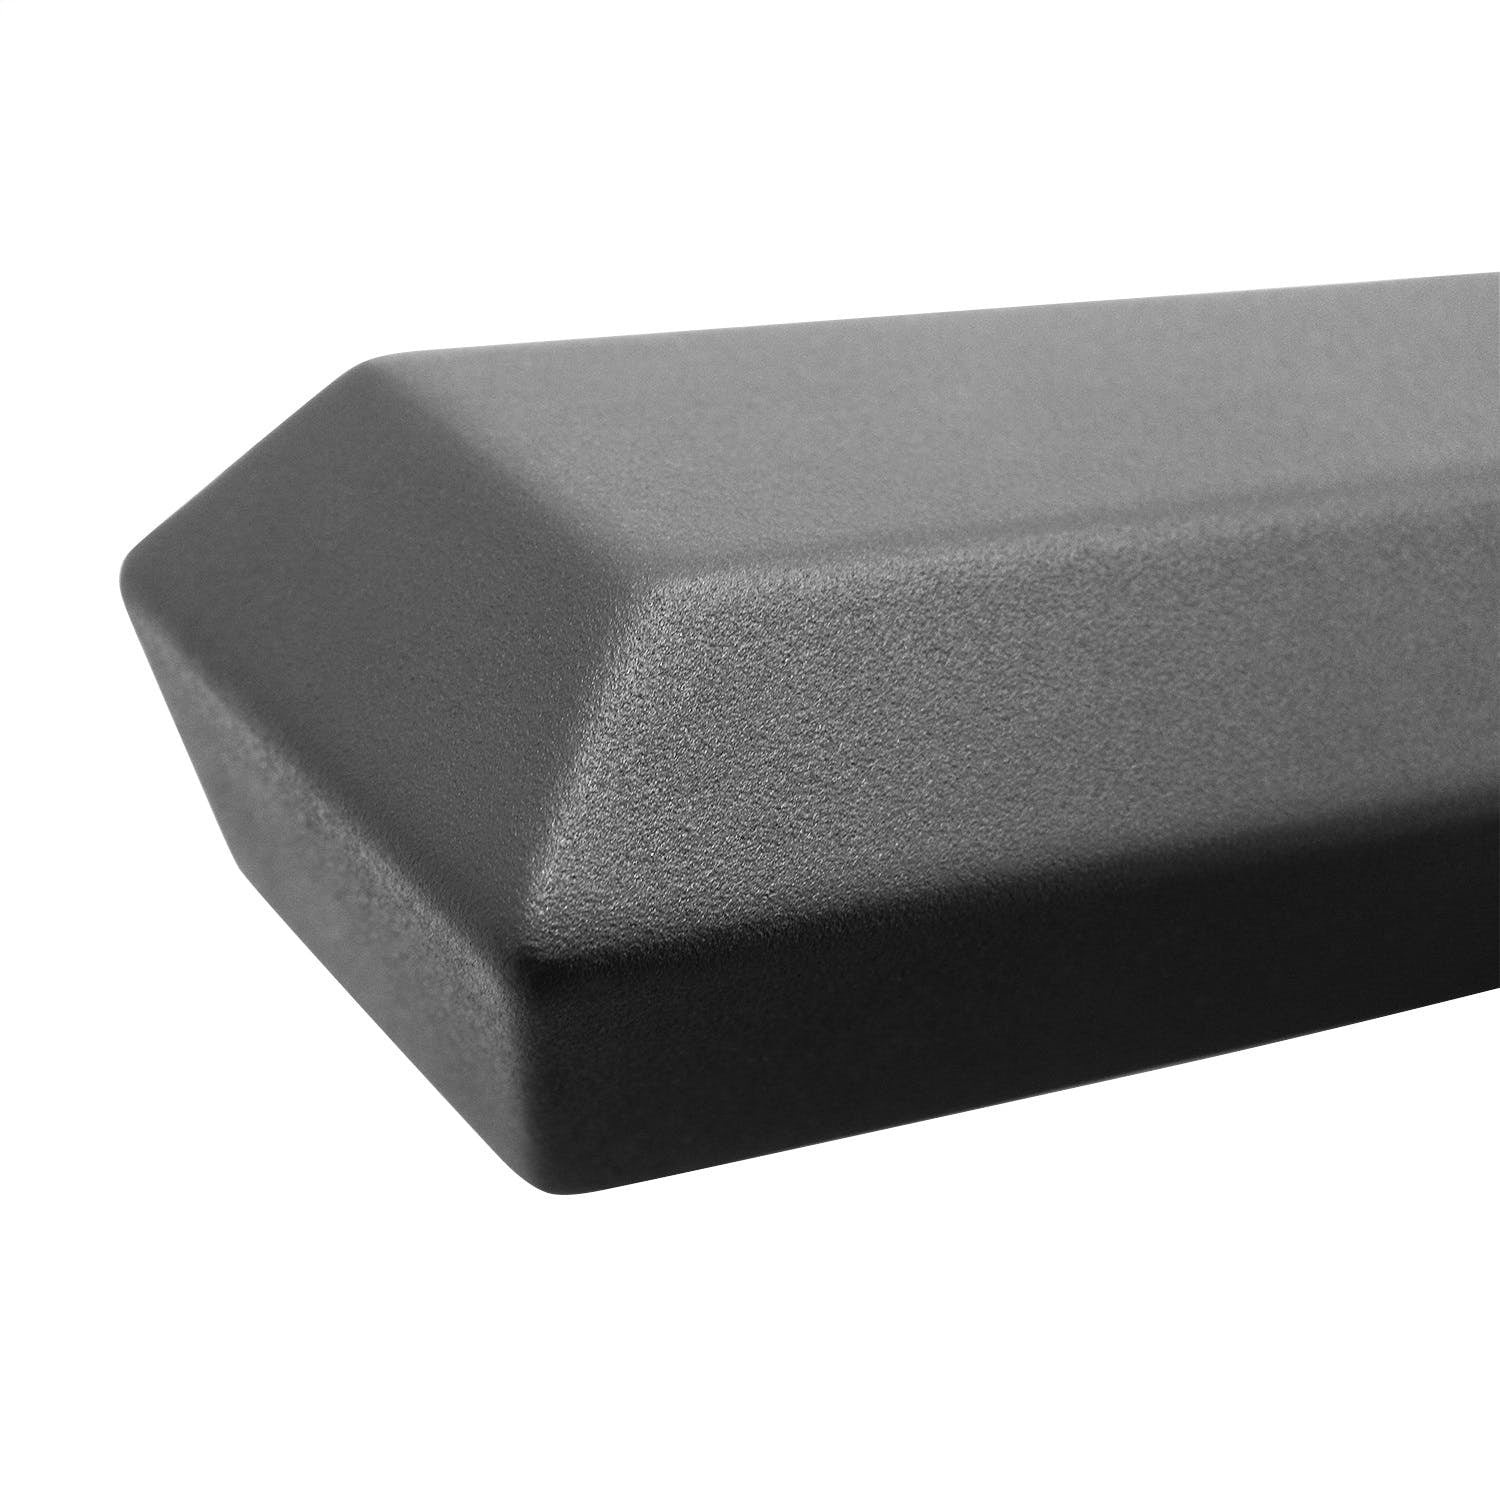 Westin Automotive 56-14095 HDX Drop Nerf Step Bars Textured Black